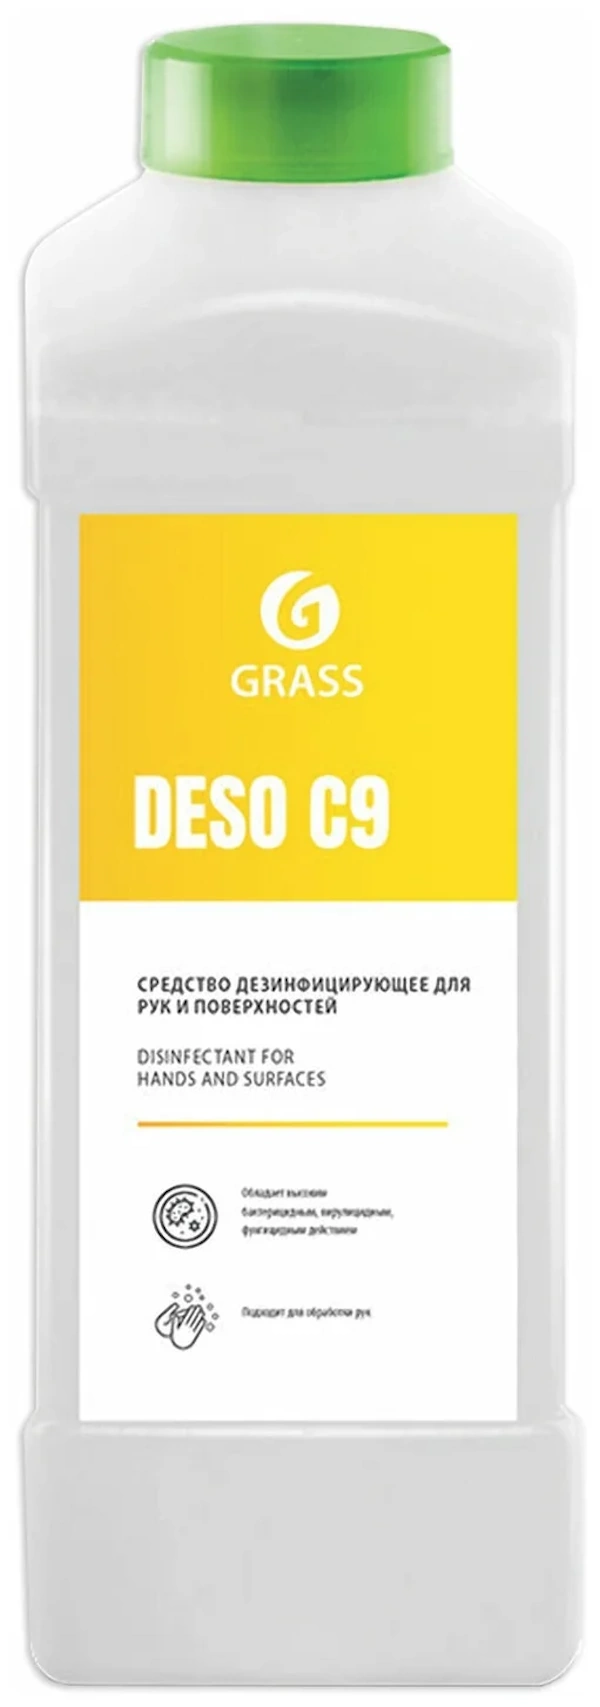 Средство Дезинфицирующее Grass Deso С9 (1 Л) GraSS арт. 125190